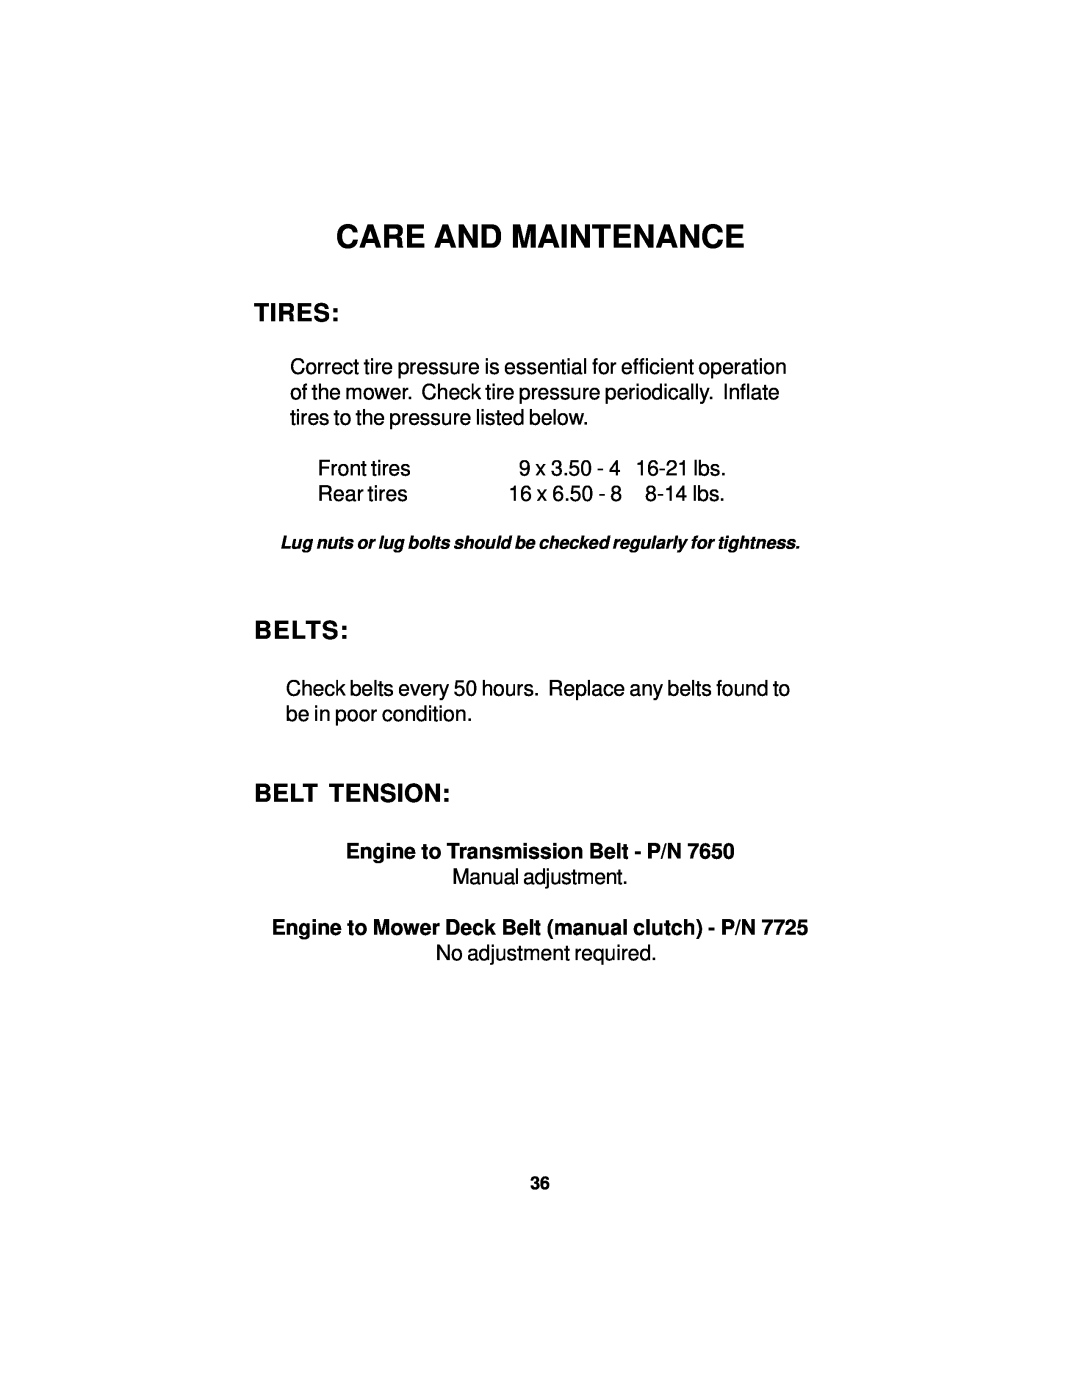 Dixon 14295-0804 manual Tires, Belts, Belt Tension, Care And Maintenance, Engine to Transmission Belt - P/N 